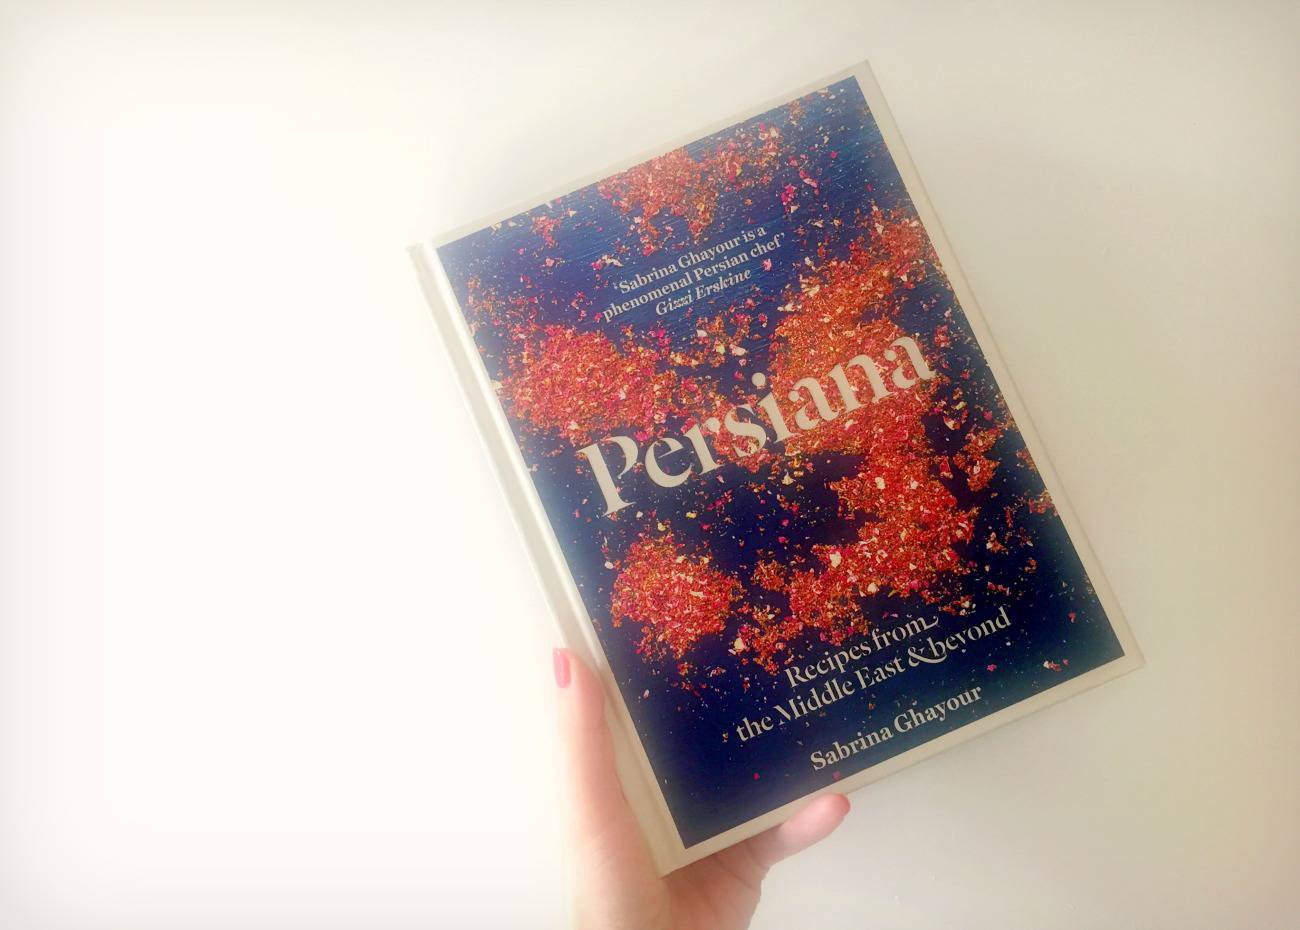 Persiana Cookbook